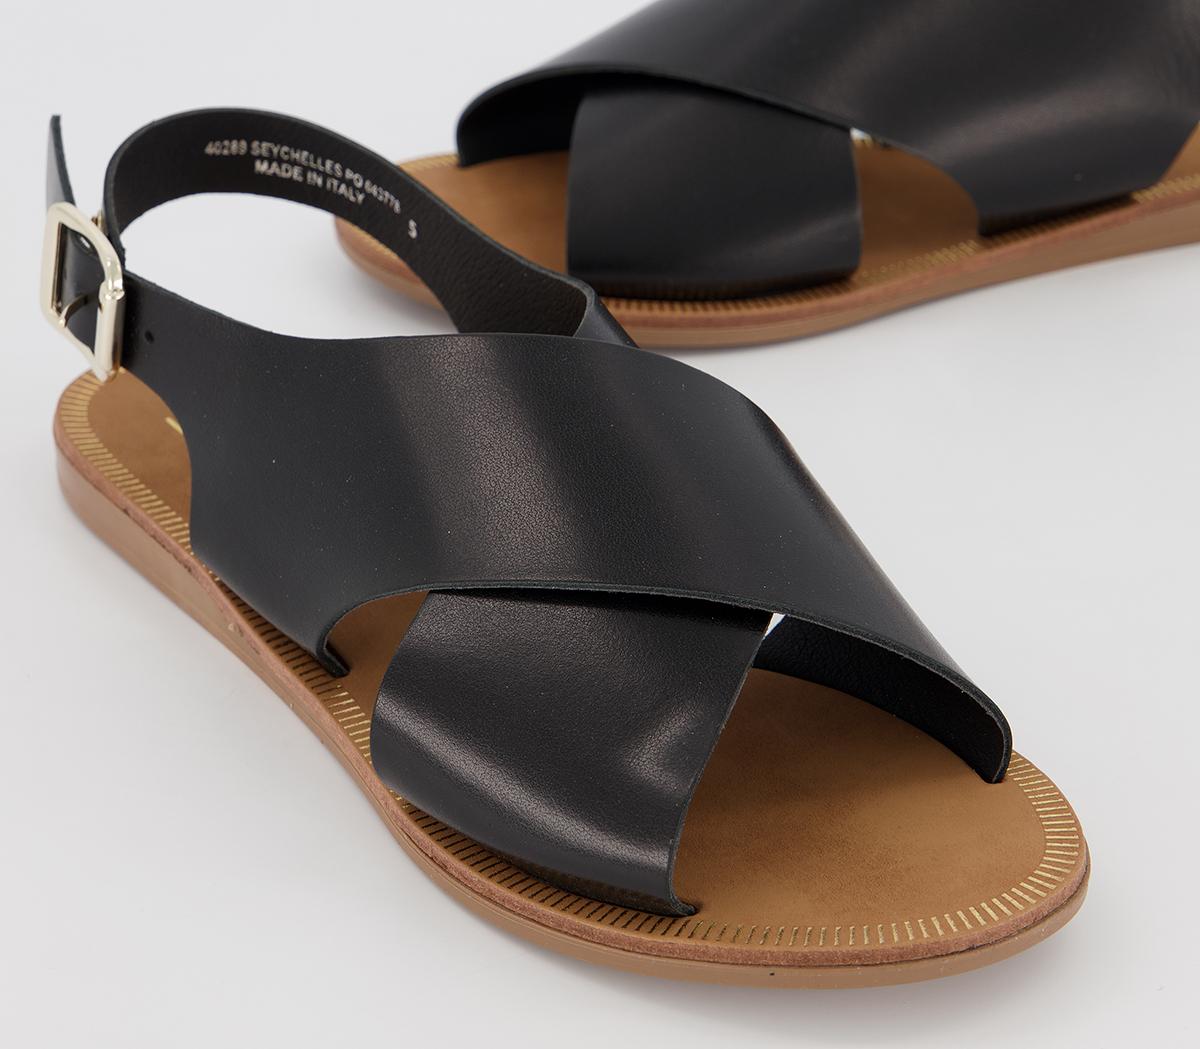 Office Seychelles Cross Strap Sandals Black Leather - Women’s Sandals